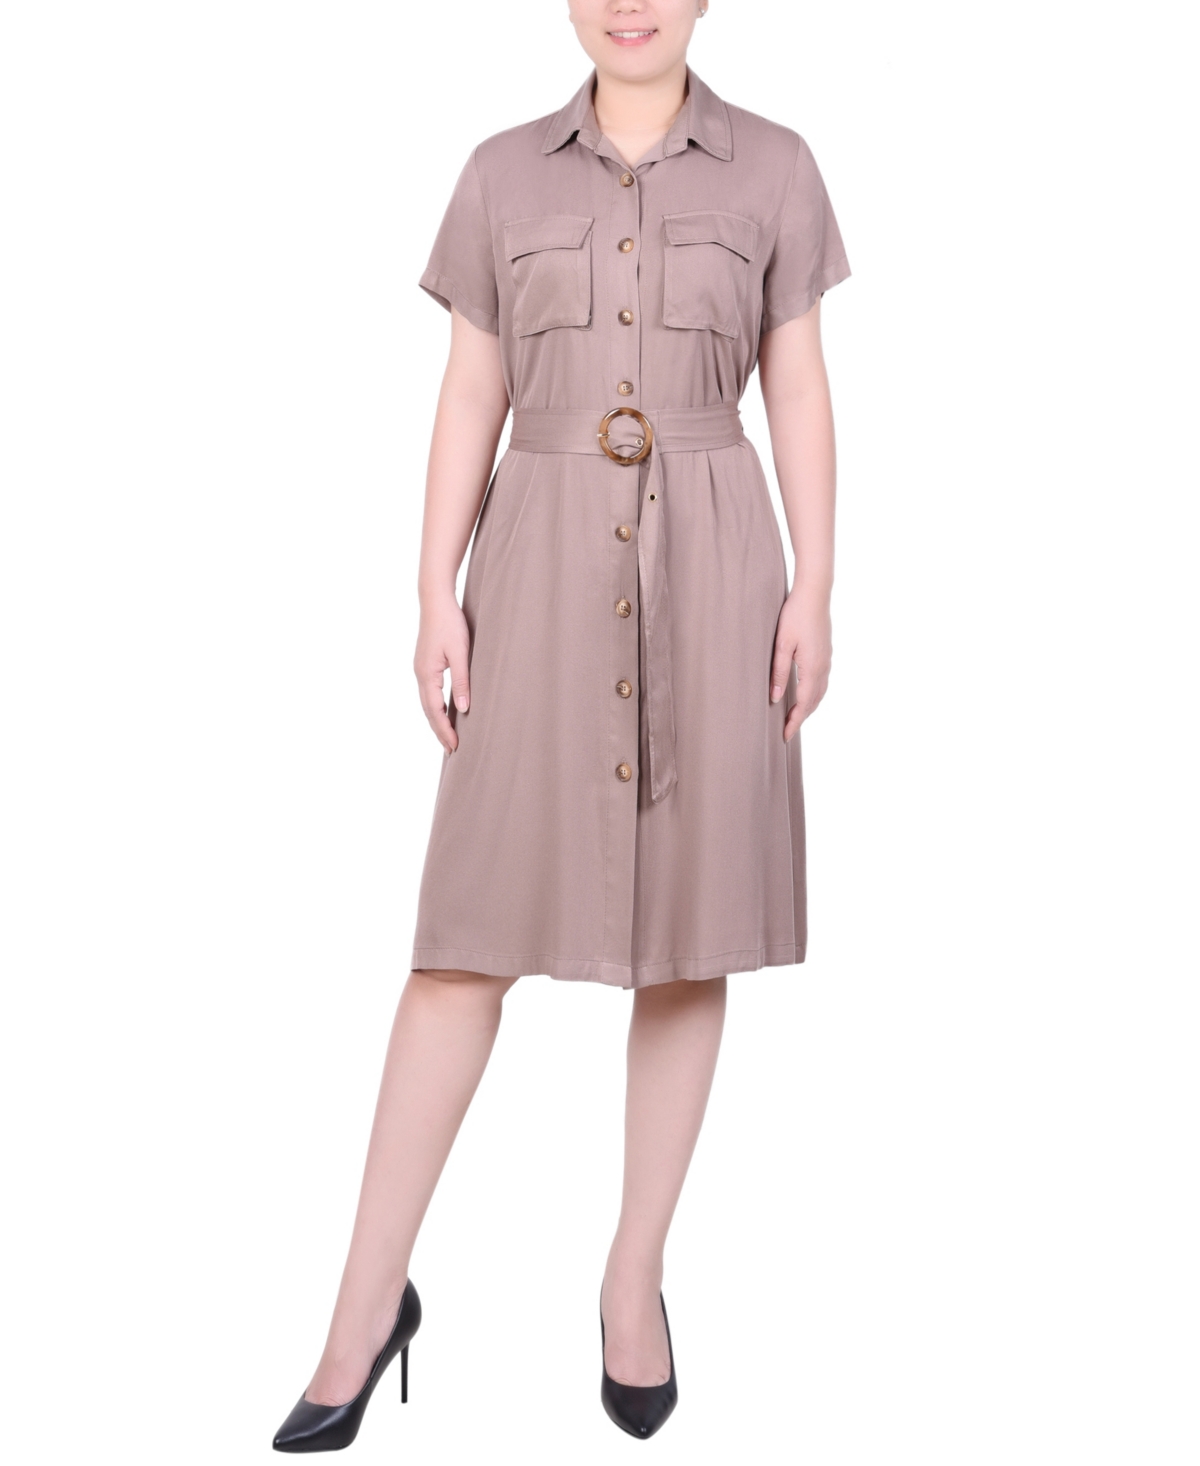 Petite Short Sleeve Belted Utility Style Dress - Portabella